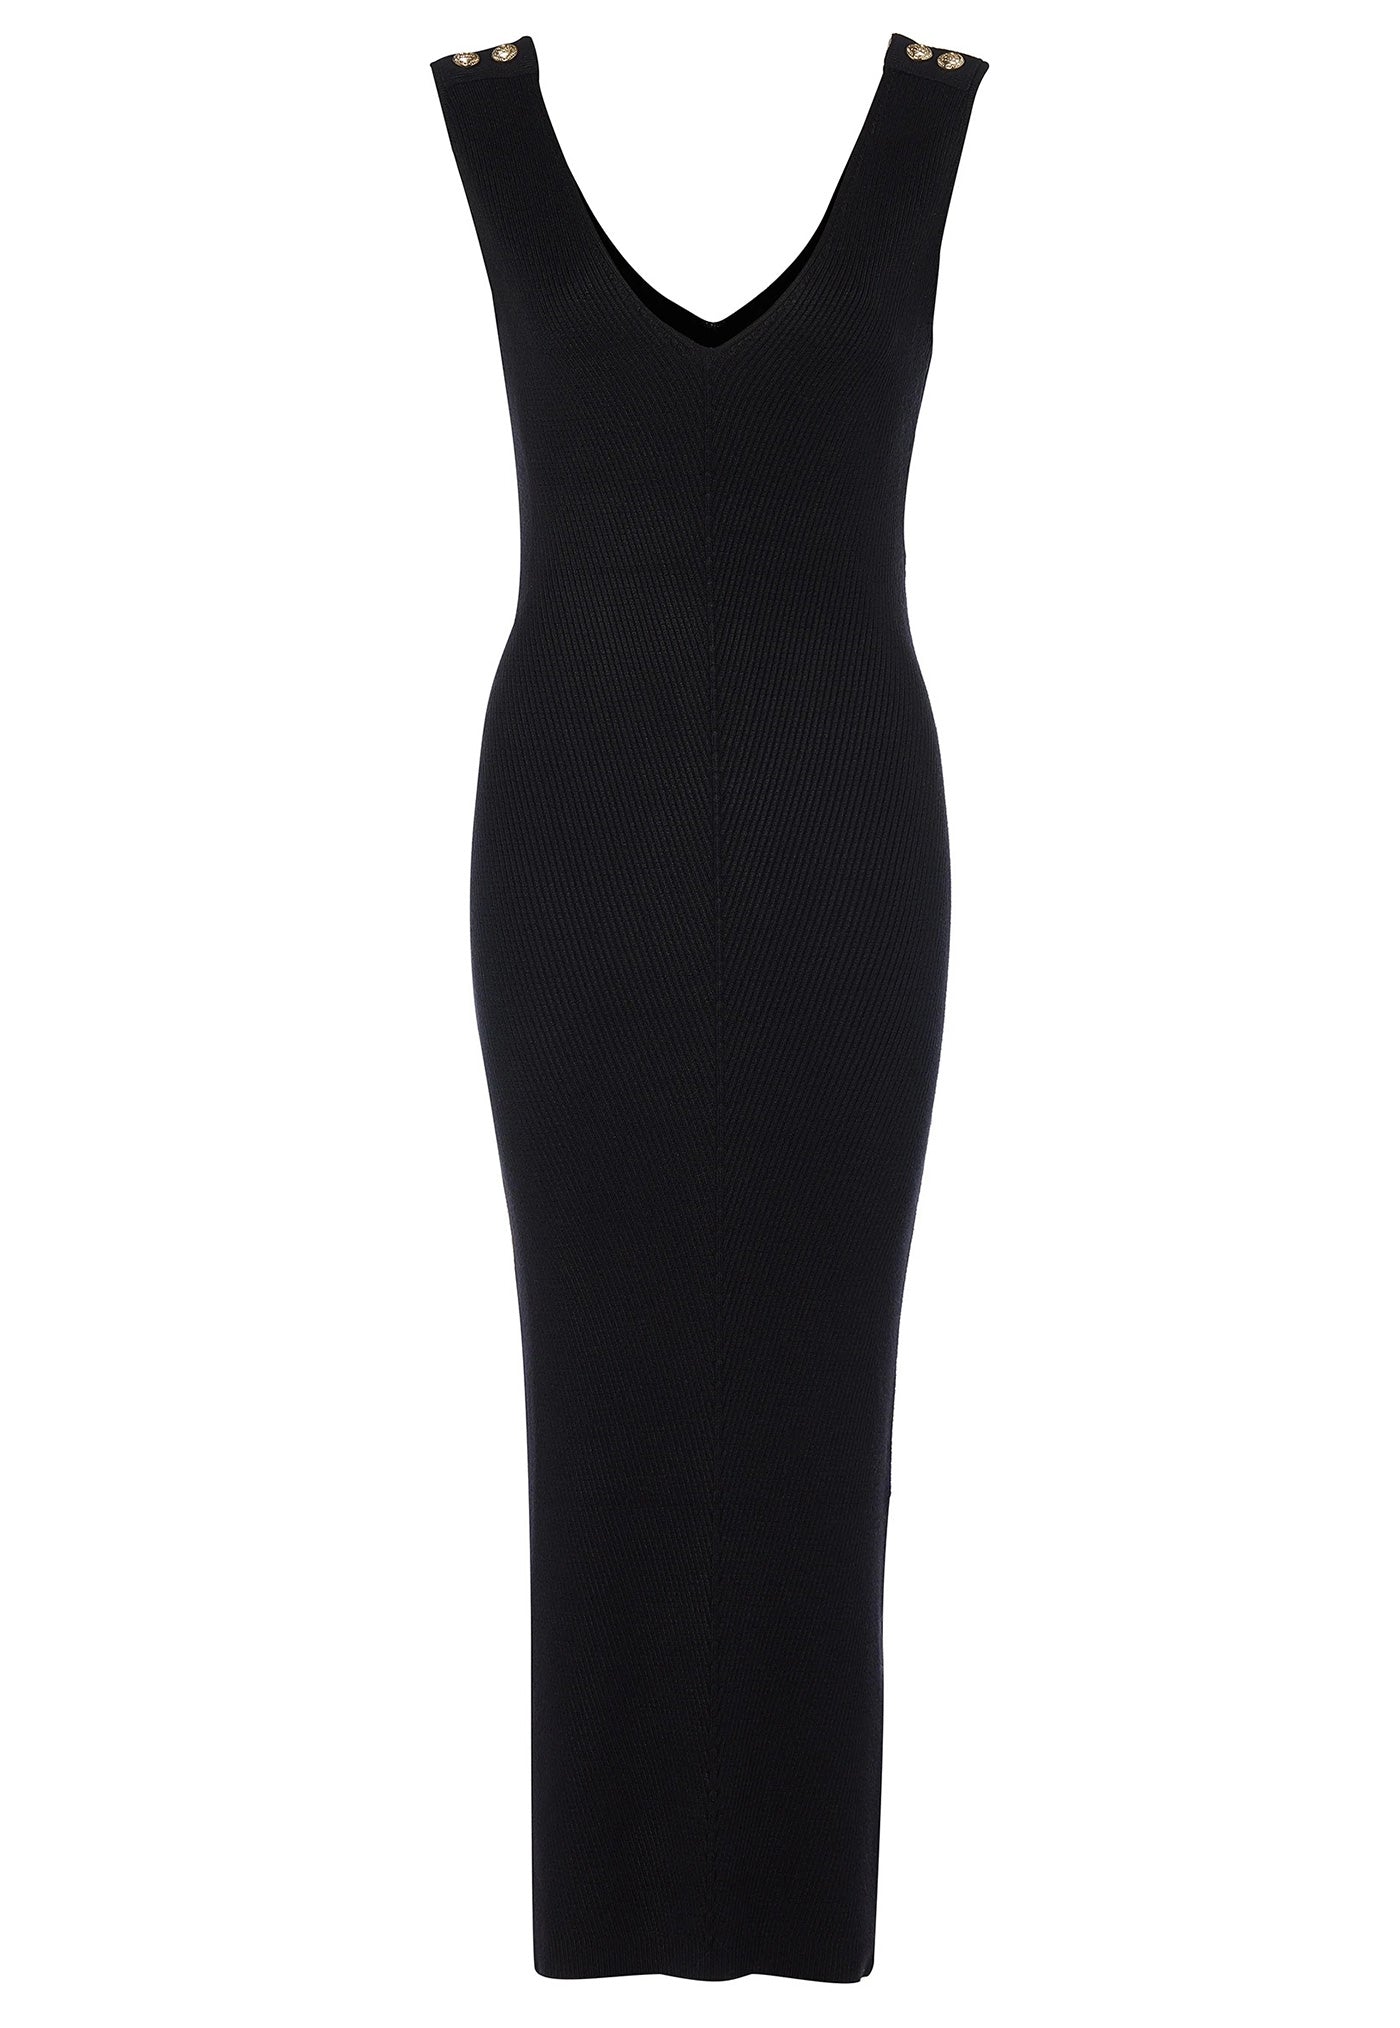 Kensington Sleeveless Dress - Black sold by Angel Divine